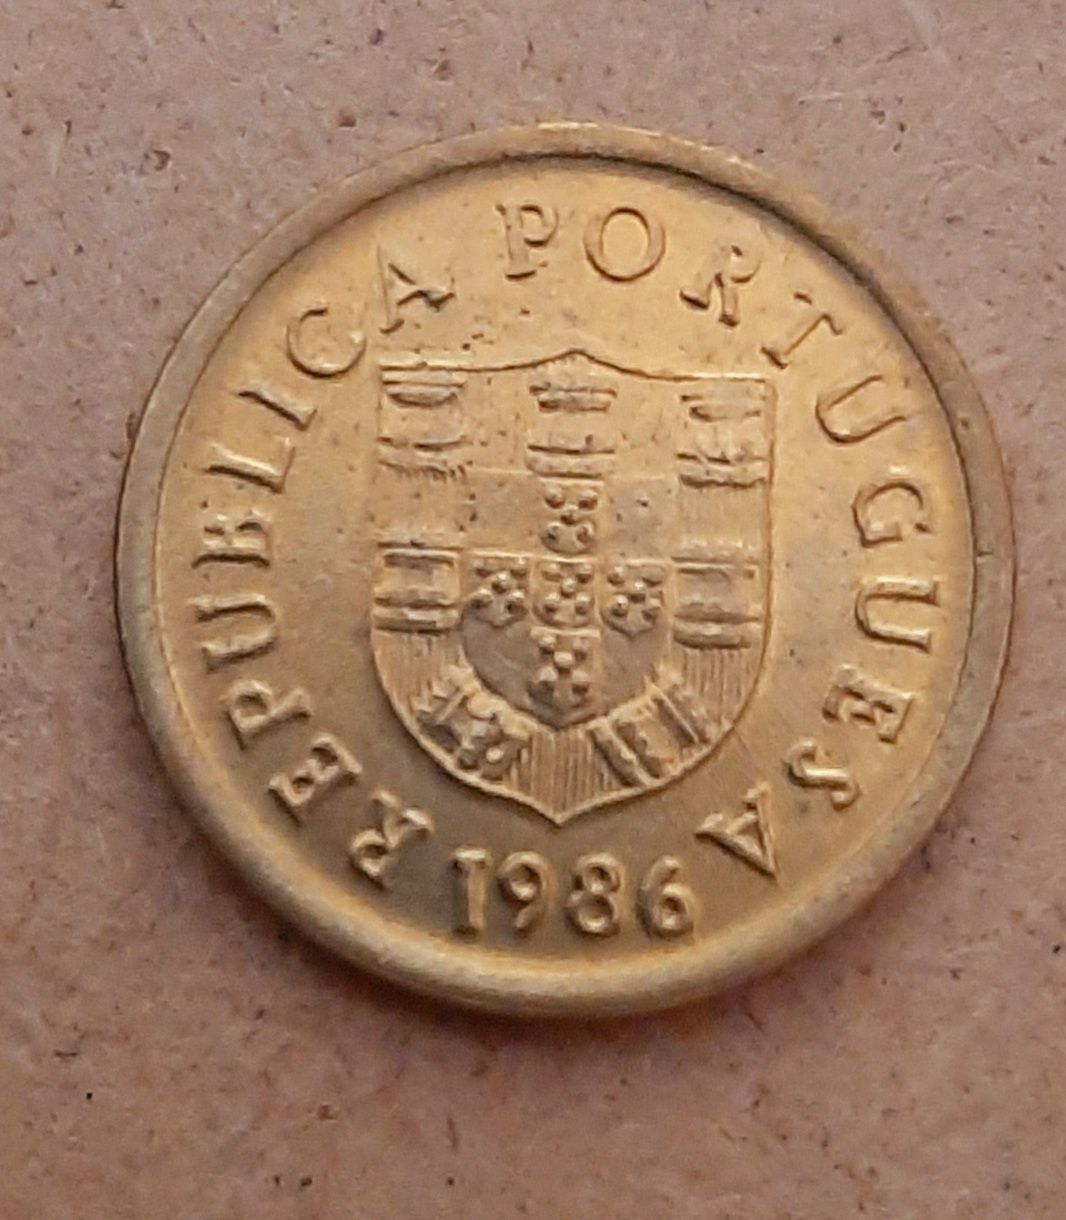 Moeda 1$00 Portugal Ano 1986